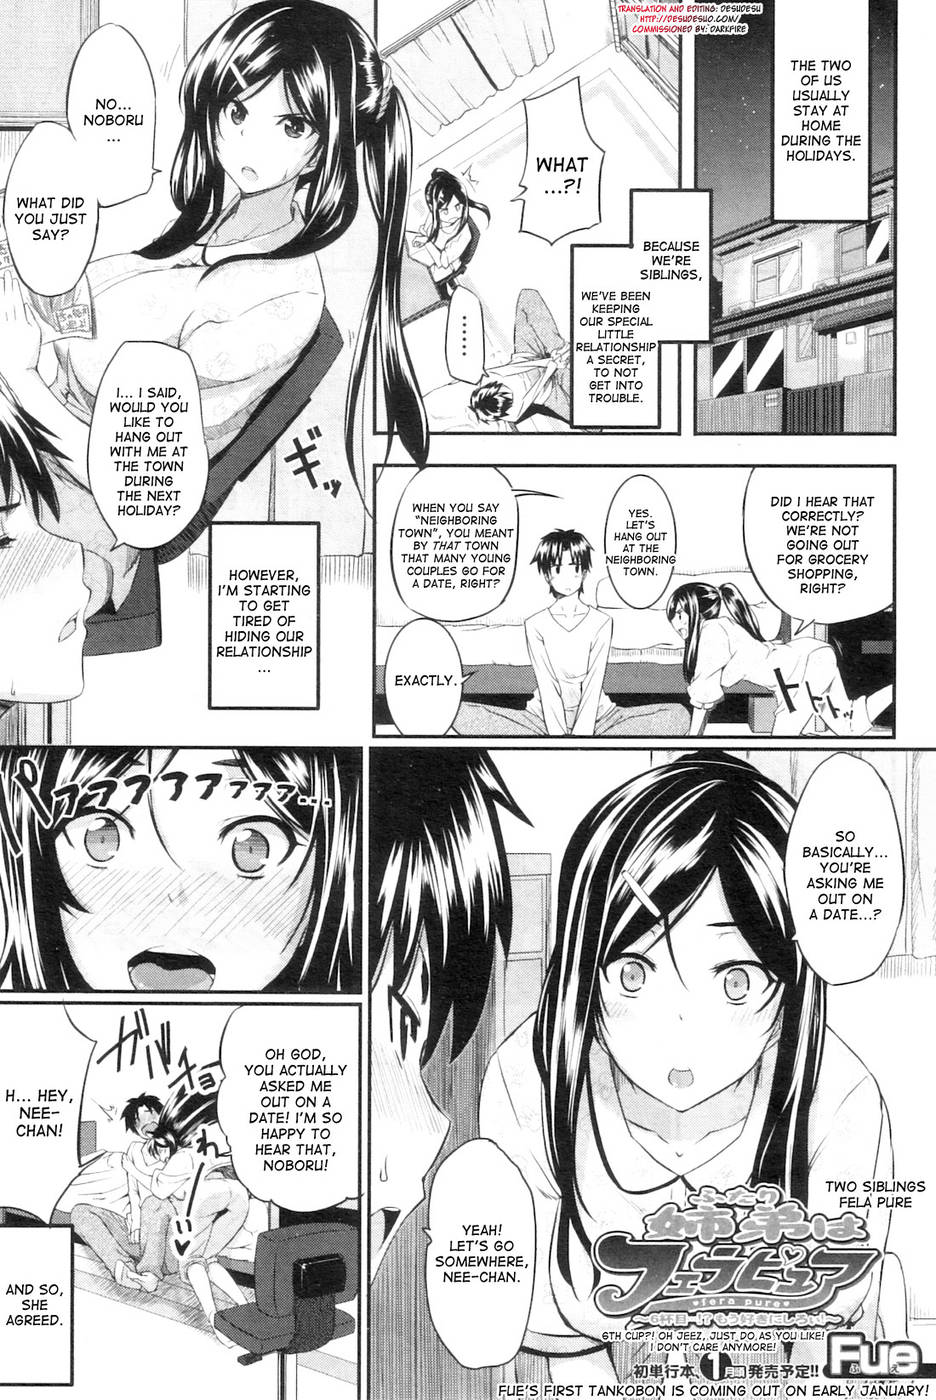 Hentai Manga Comic-Two Siblings' Fela Pure-Chapter 6-1